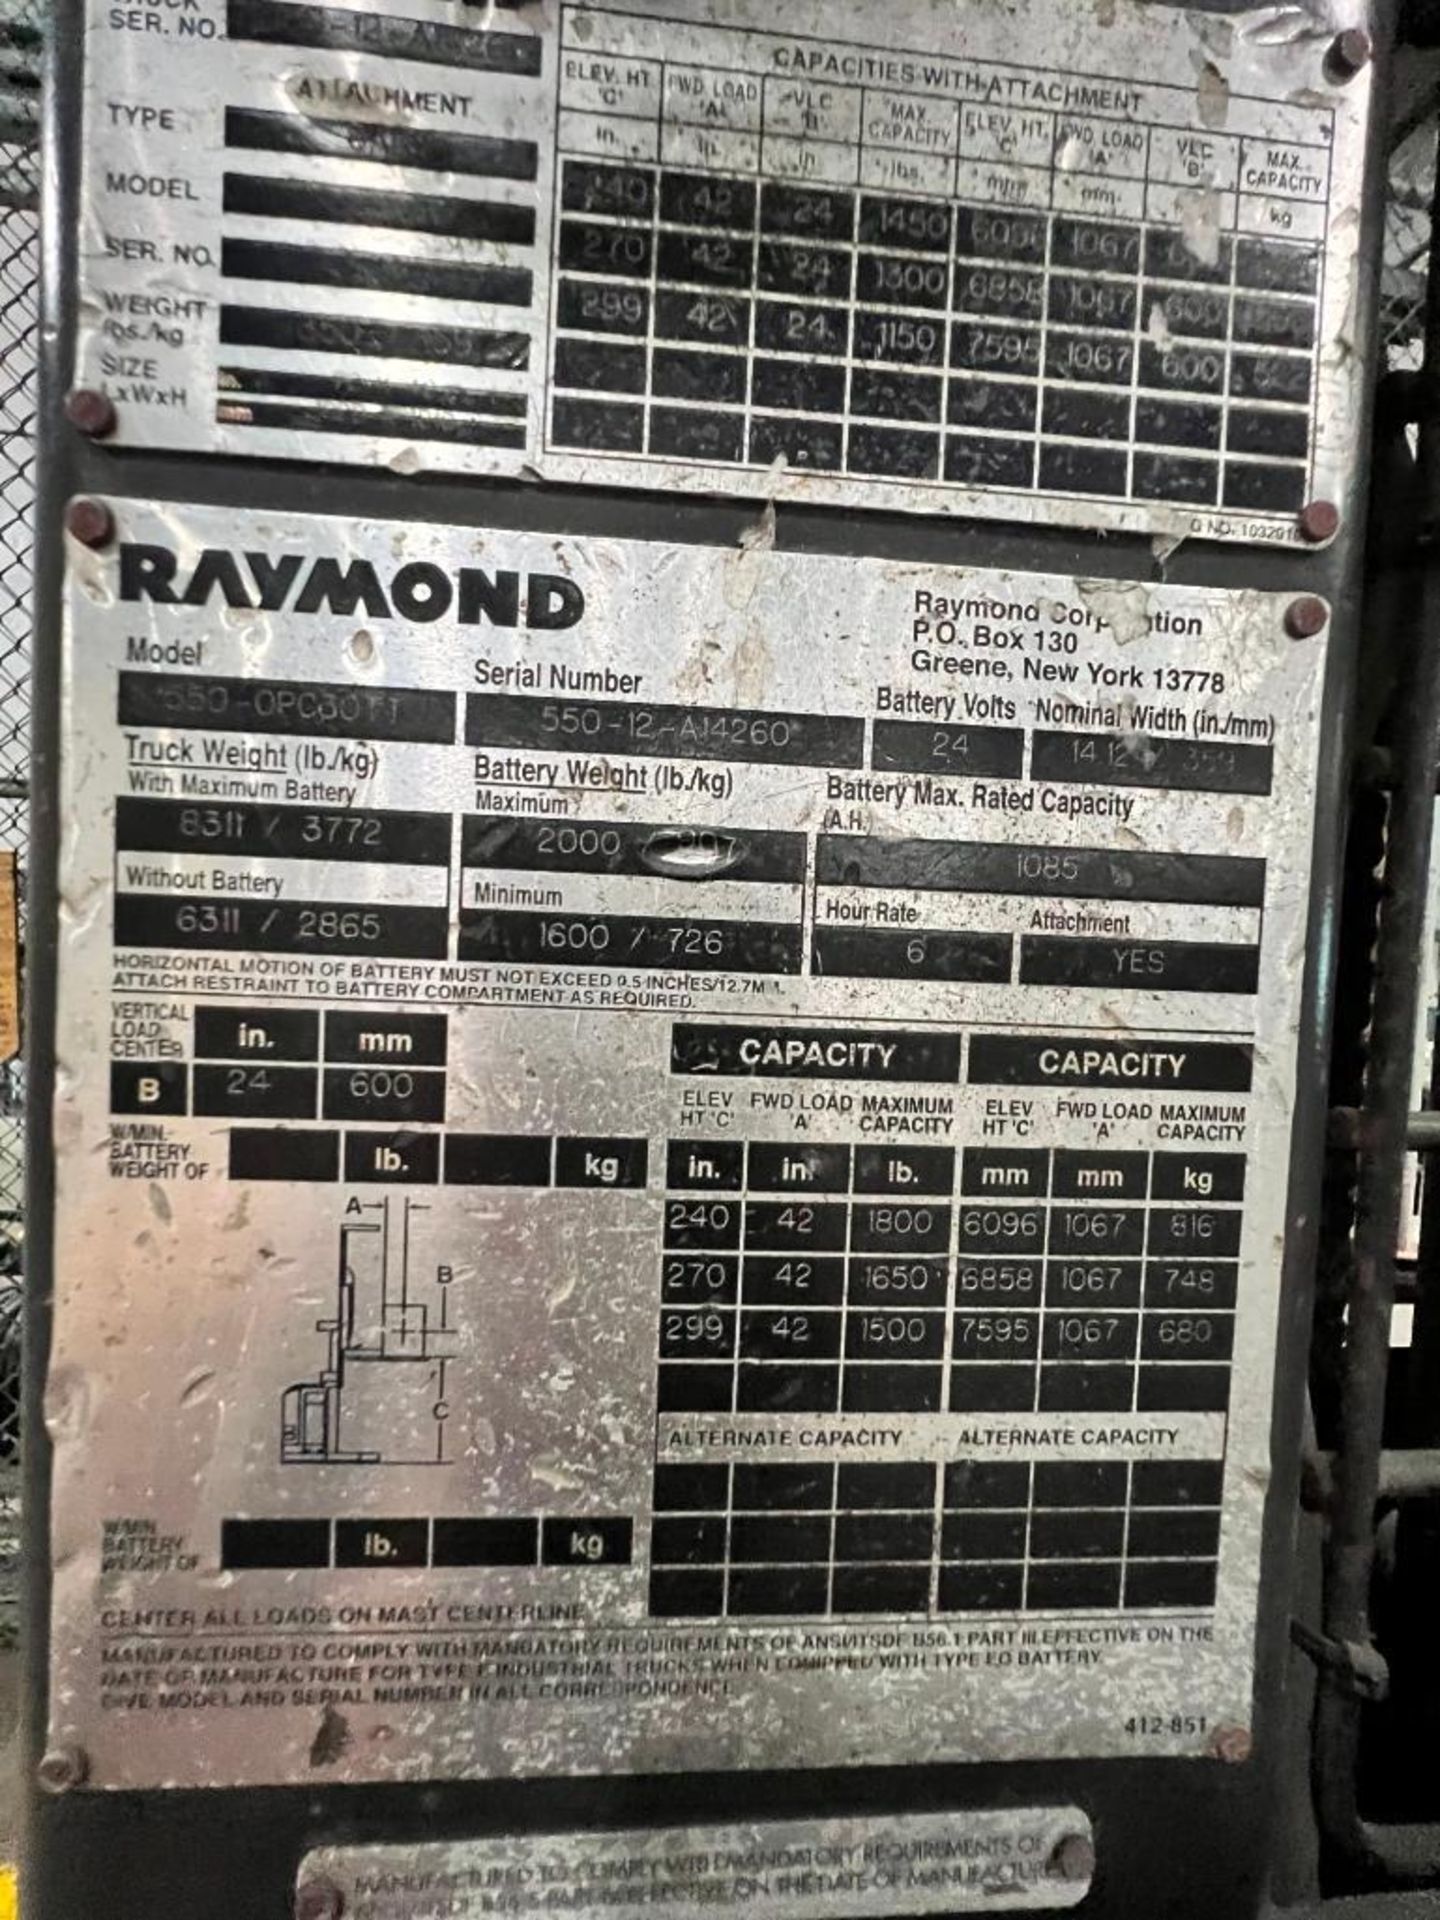 Raymond 3,000 LB. Order Picker, Model 550-OPC30TT, S/N 550-12-A14260 (No Battery) ***Buyer is Respon - Image 5 of 6